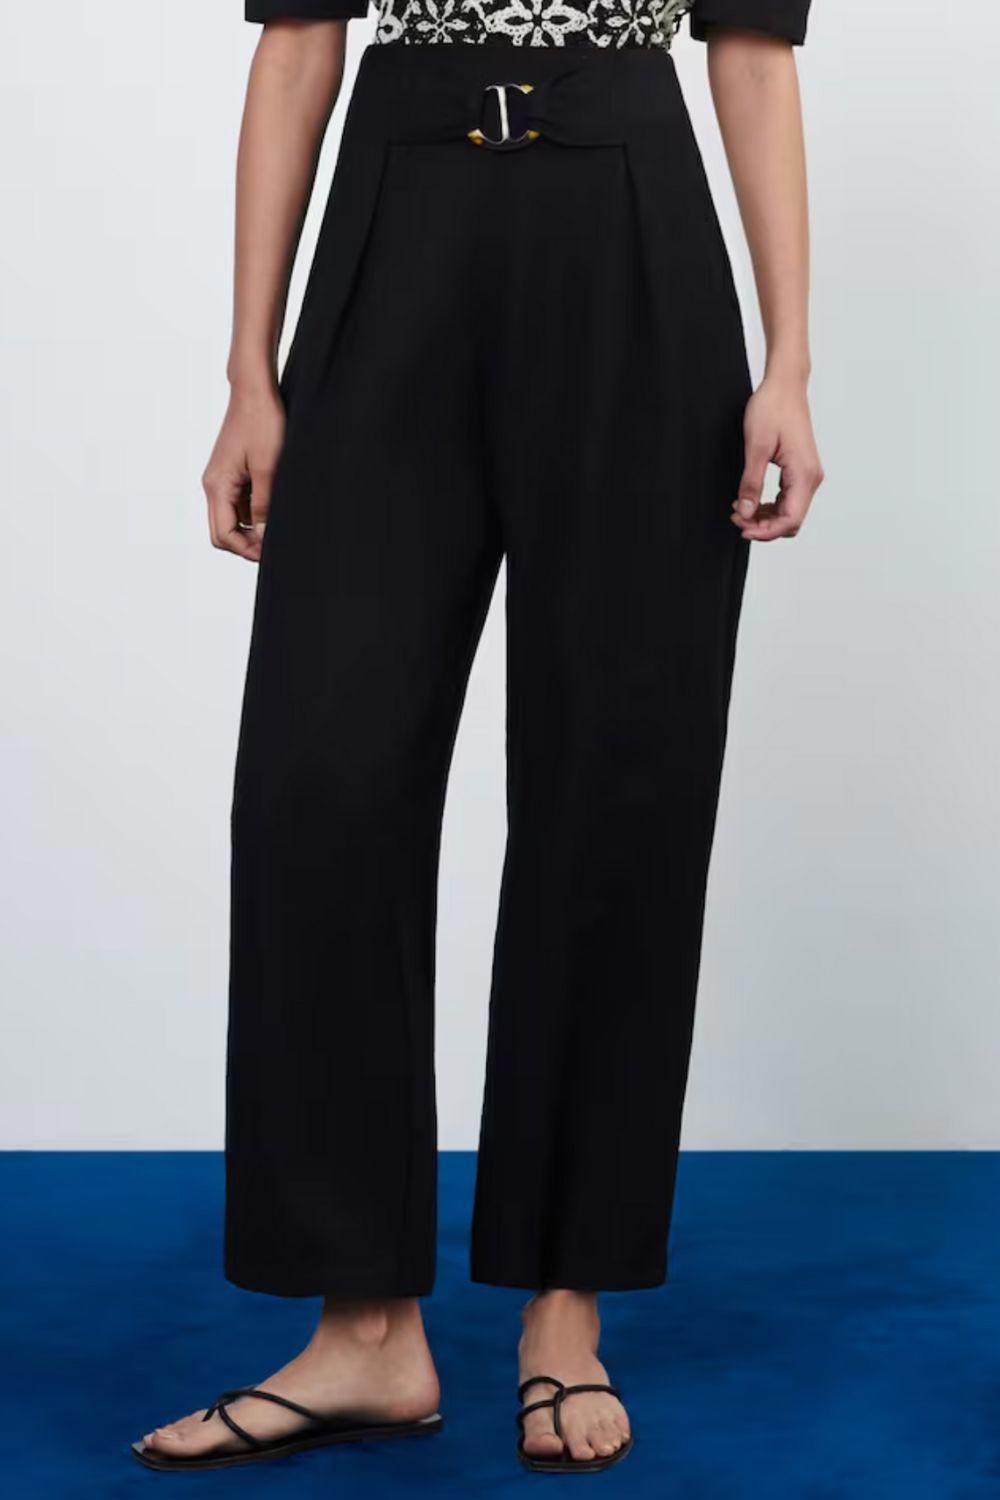 pantalones culotte negros 1